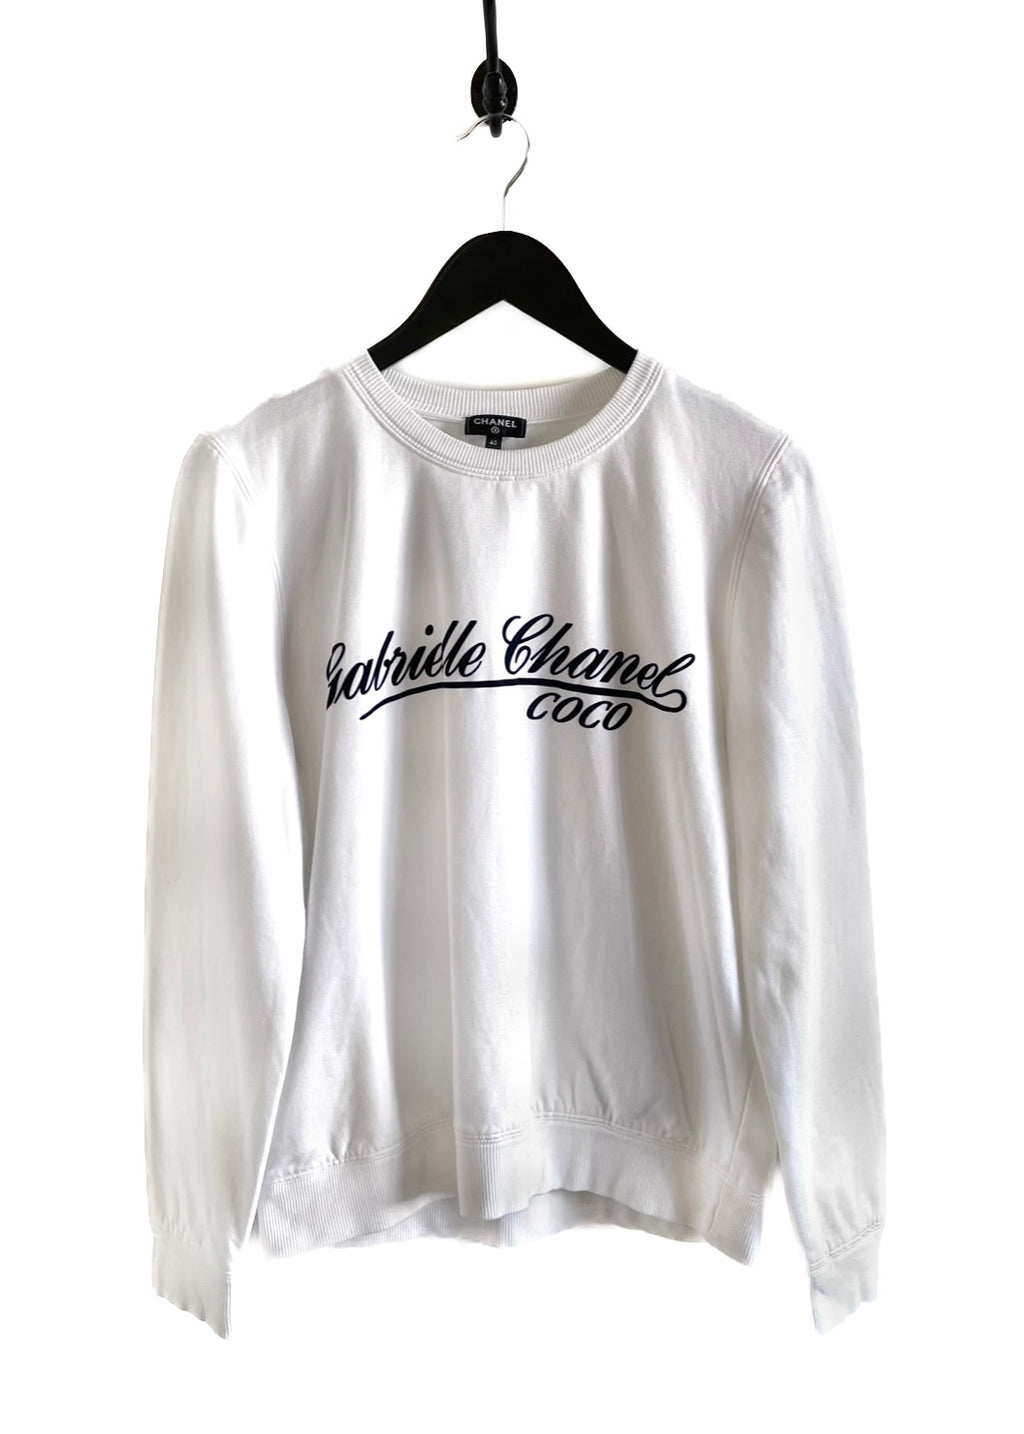 Chanel white cotton jacket - Gem